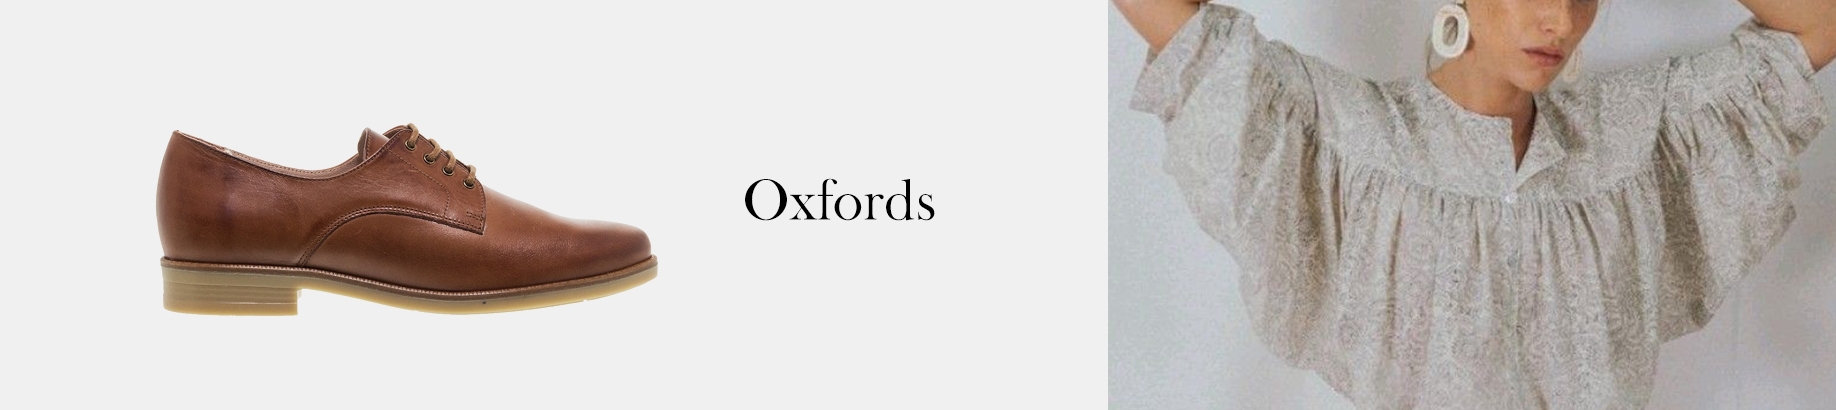 OXFORDS